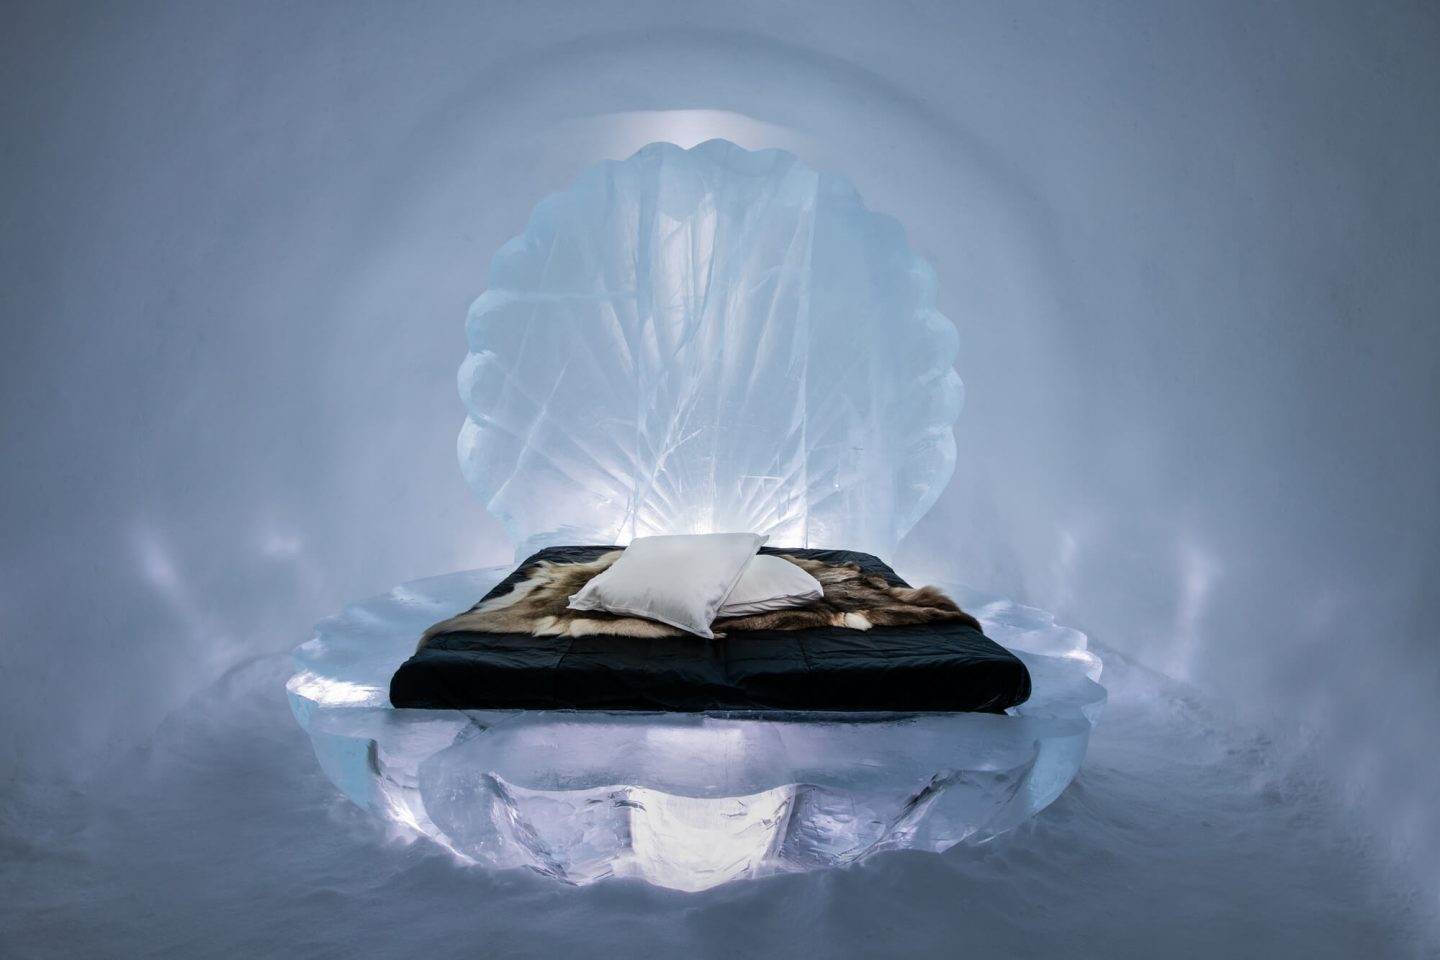 icehotel34-sea-inside-deluxe-art-suite-by-kristina-mockel-and-sebastian-scheller-ak